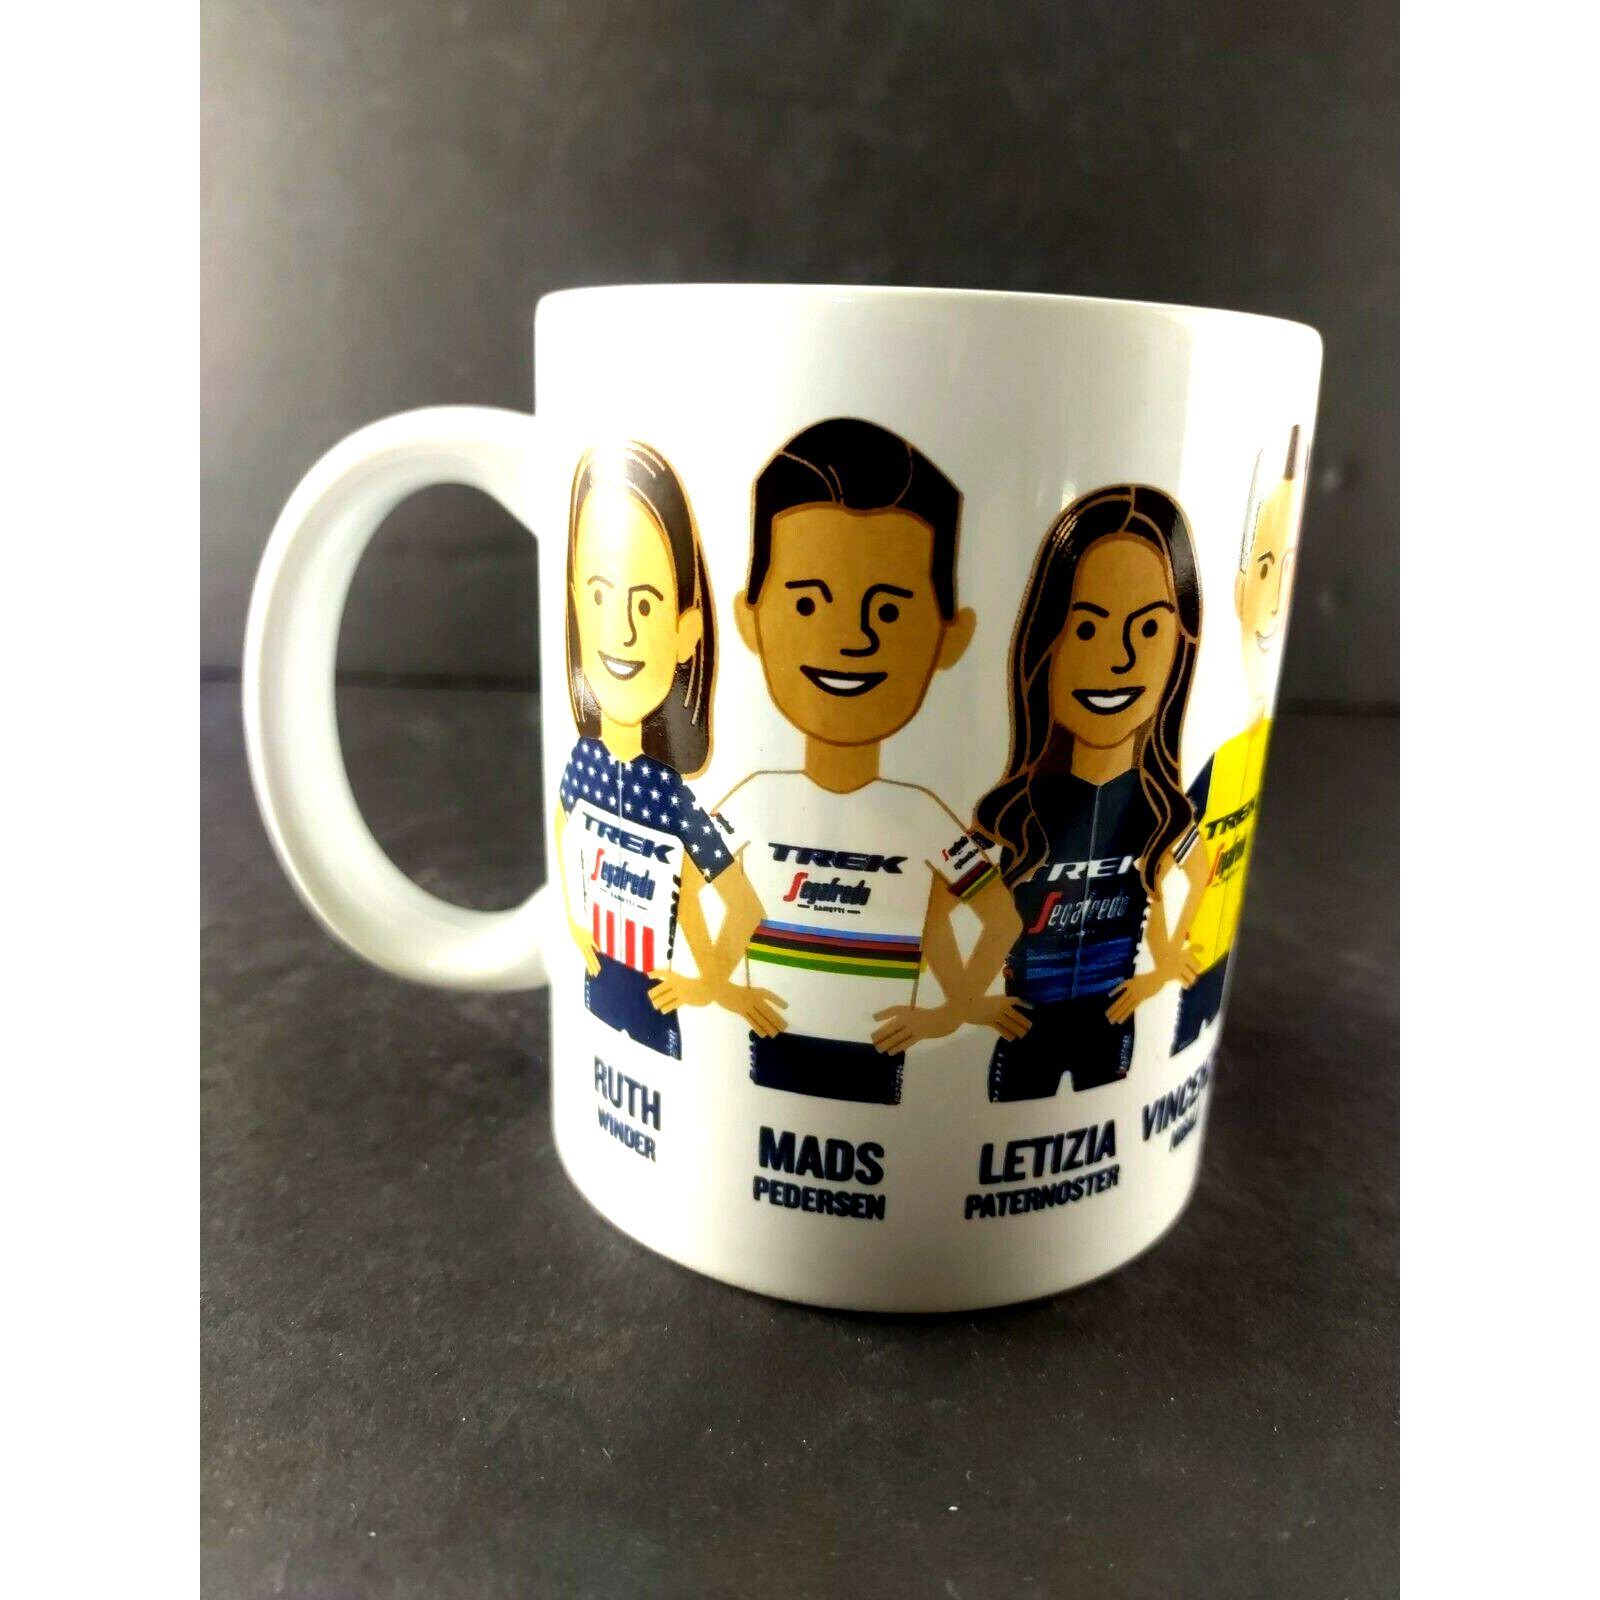 Trek - Sagafredo Coffee Cup Mug Cycling Team Racing UCI World Team